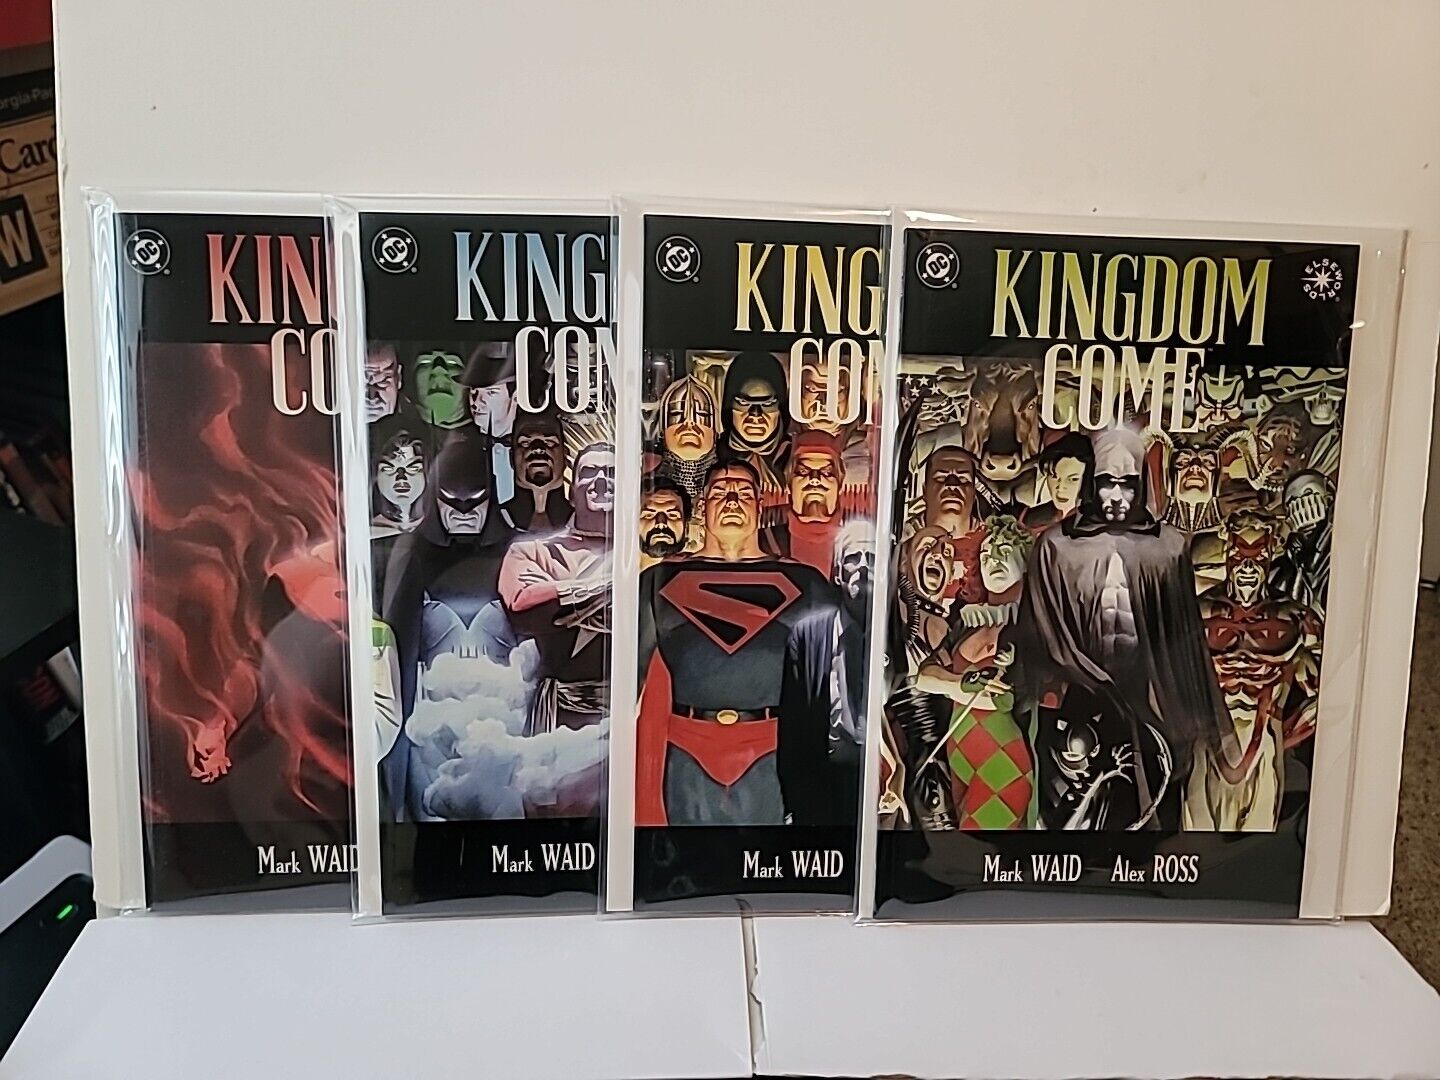 Kingdom Come #1 2 3 4 Complete Series DC Comics 1996 Mark Waid Alex Ross 1-4